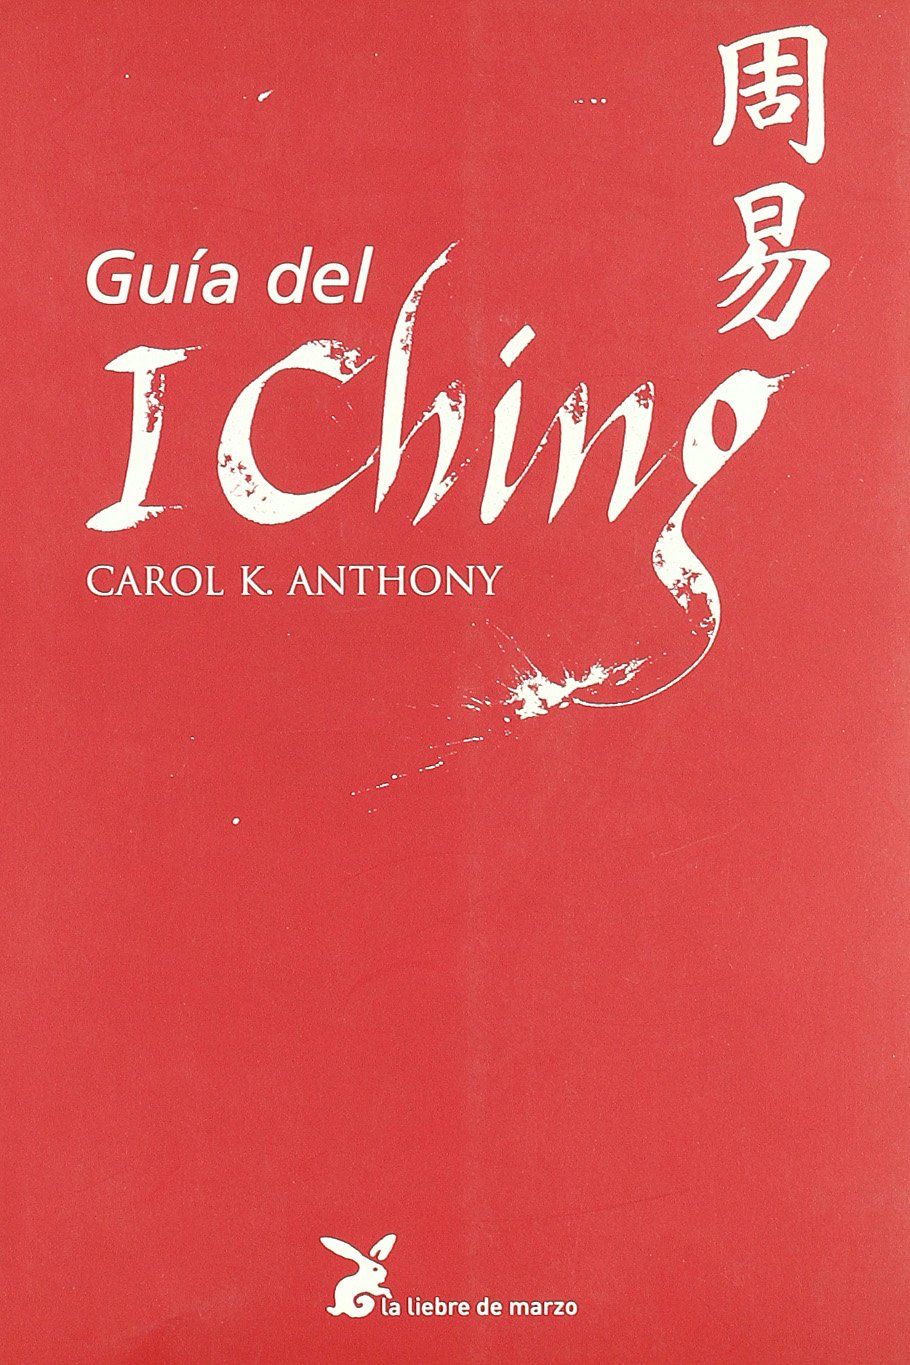 GUÍA DEL I CHING